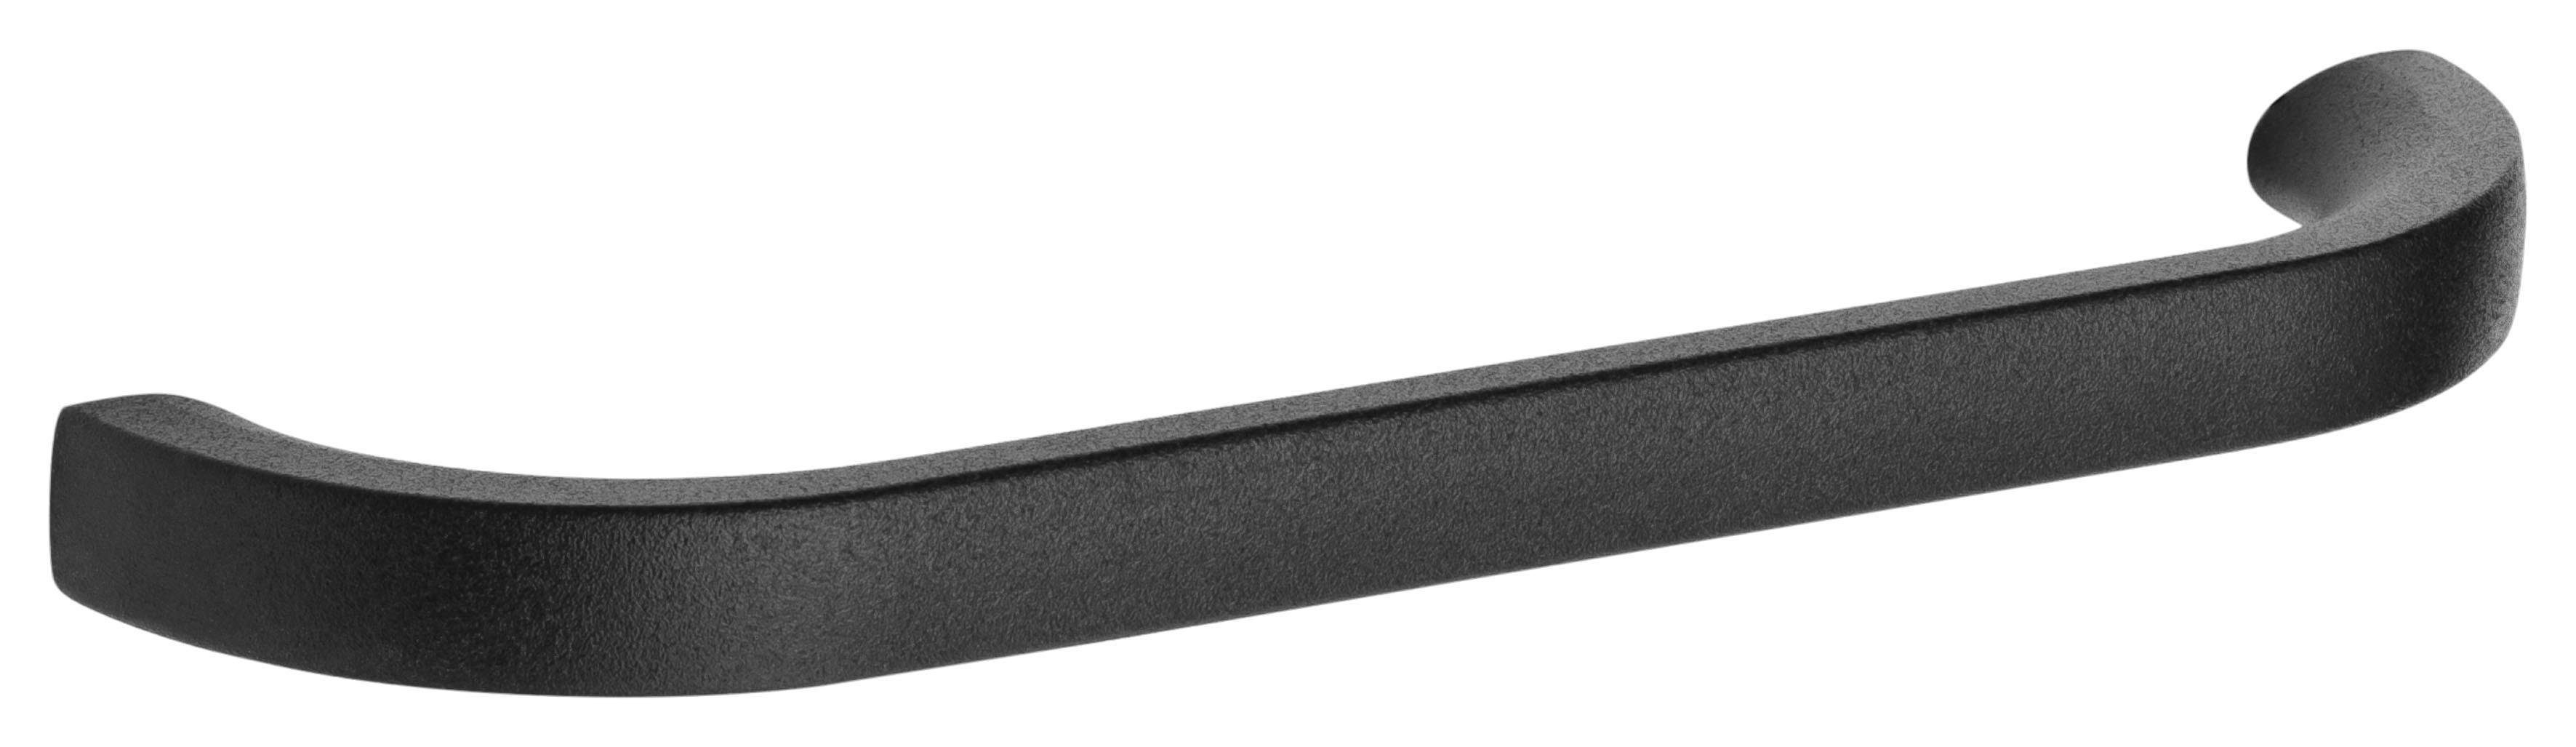 basaltgrau/basaltgrau basaltgrau cm Eckhängeschrank Soft-Close-Funktion mit Elga und 60x60 Breite OPTIFIT Metallgriff, |